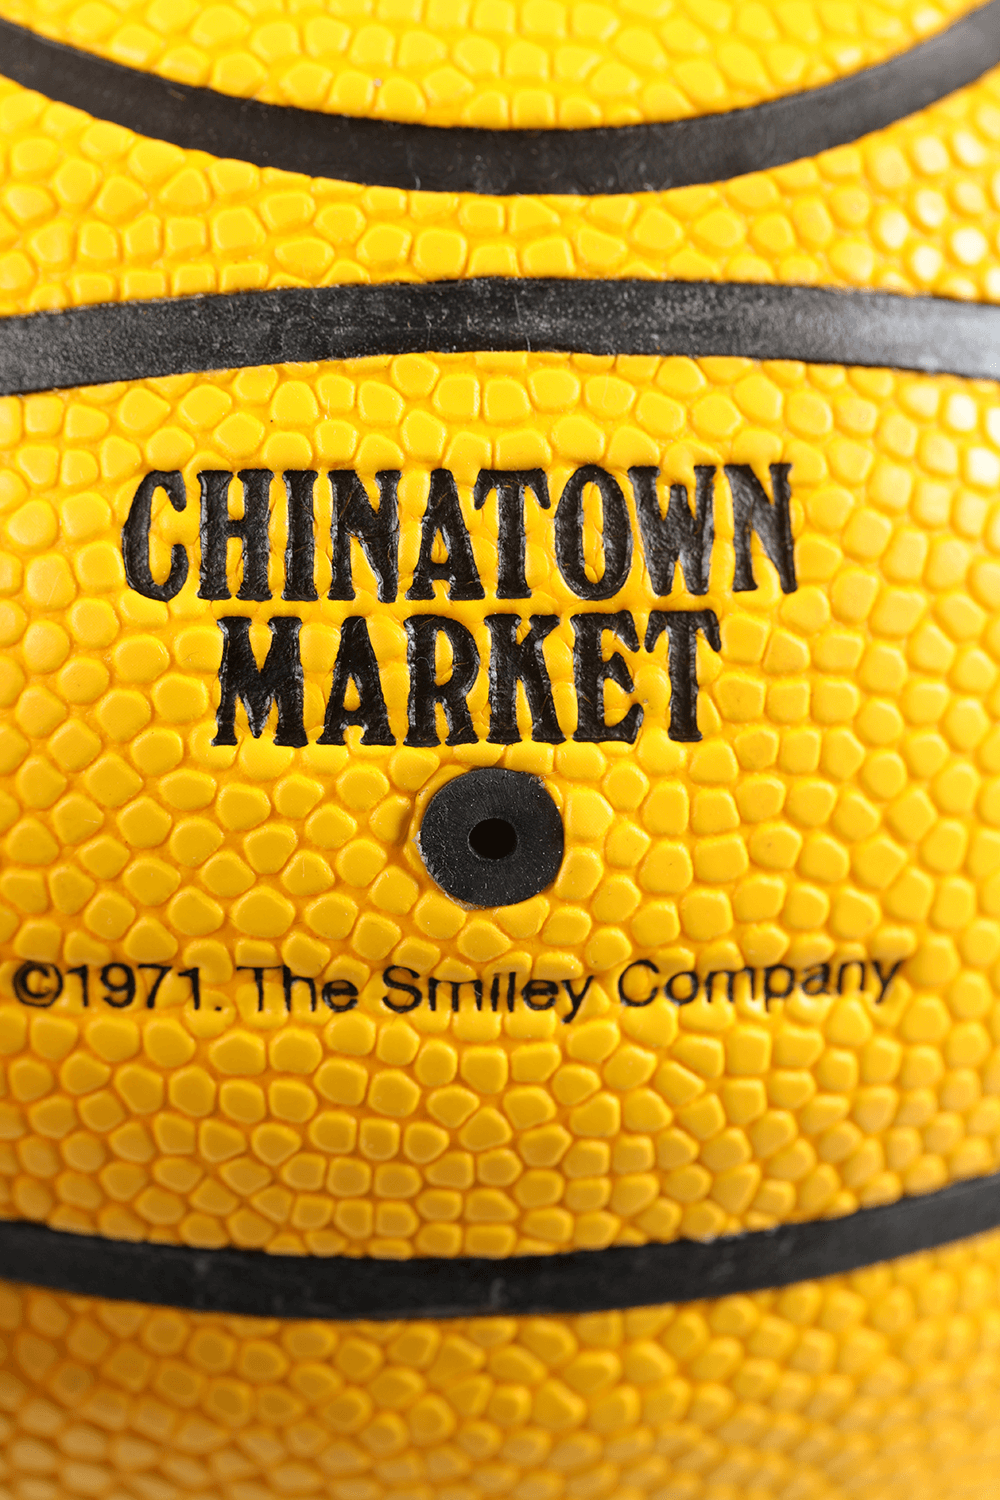 Yellow Smiley Mini Basketball MARKET